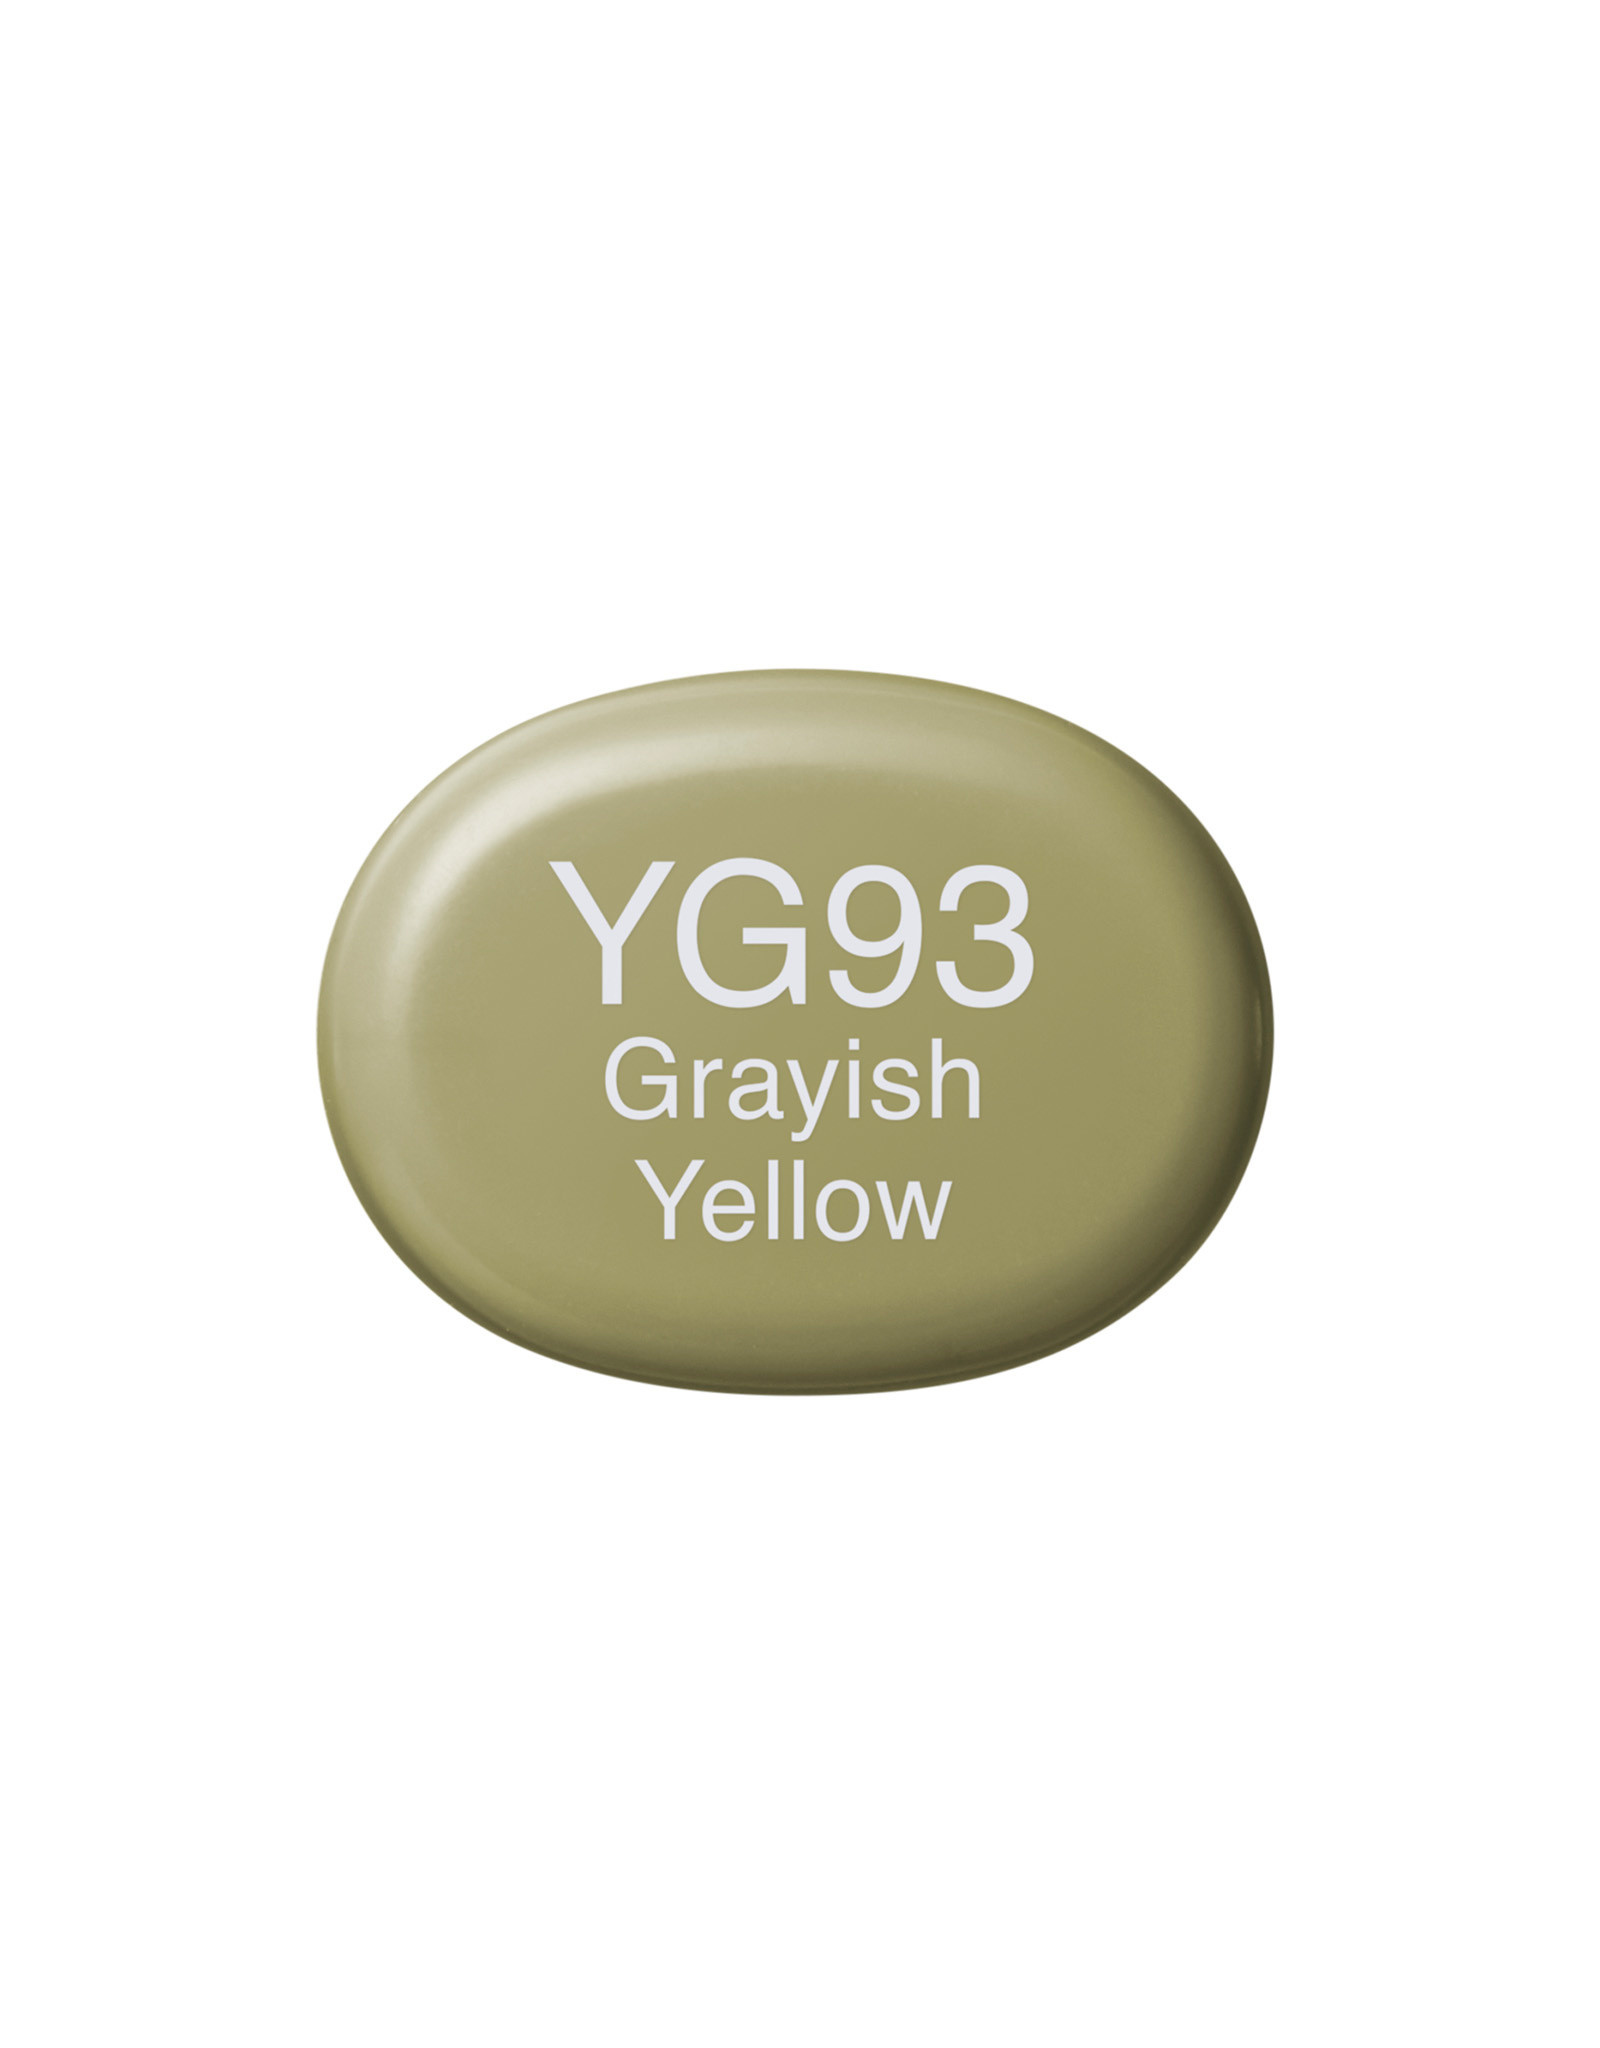 COPIC COPIC Sketch Marker YG93 Grayish Yellow